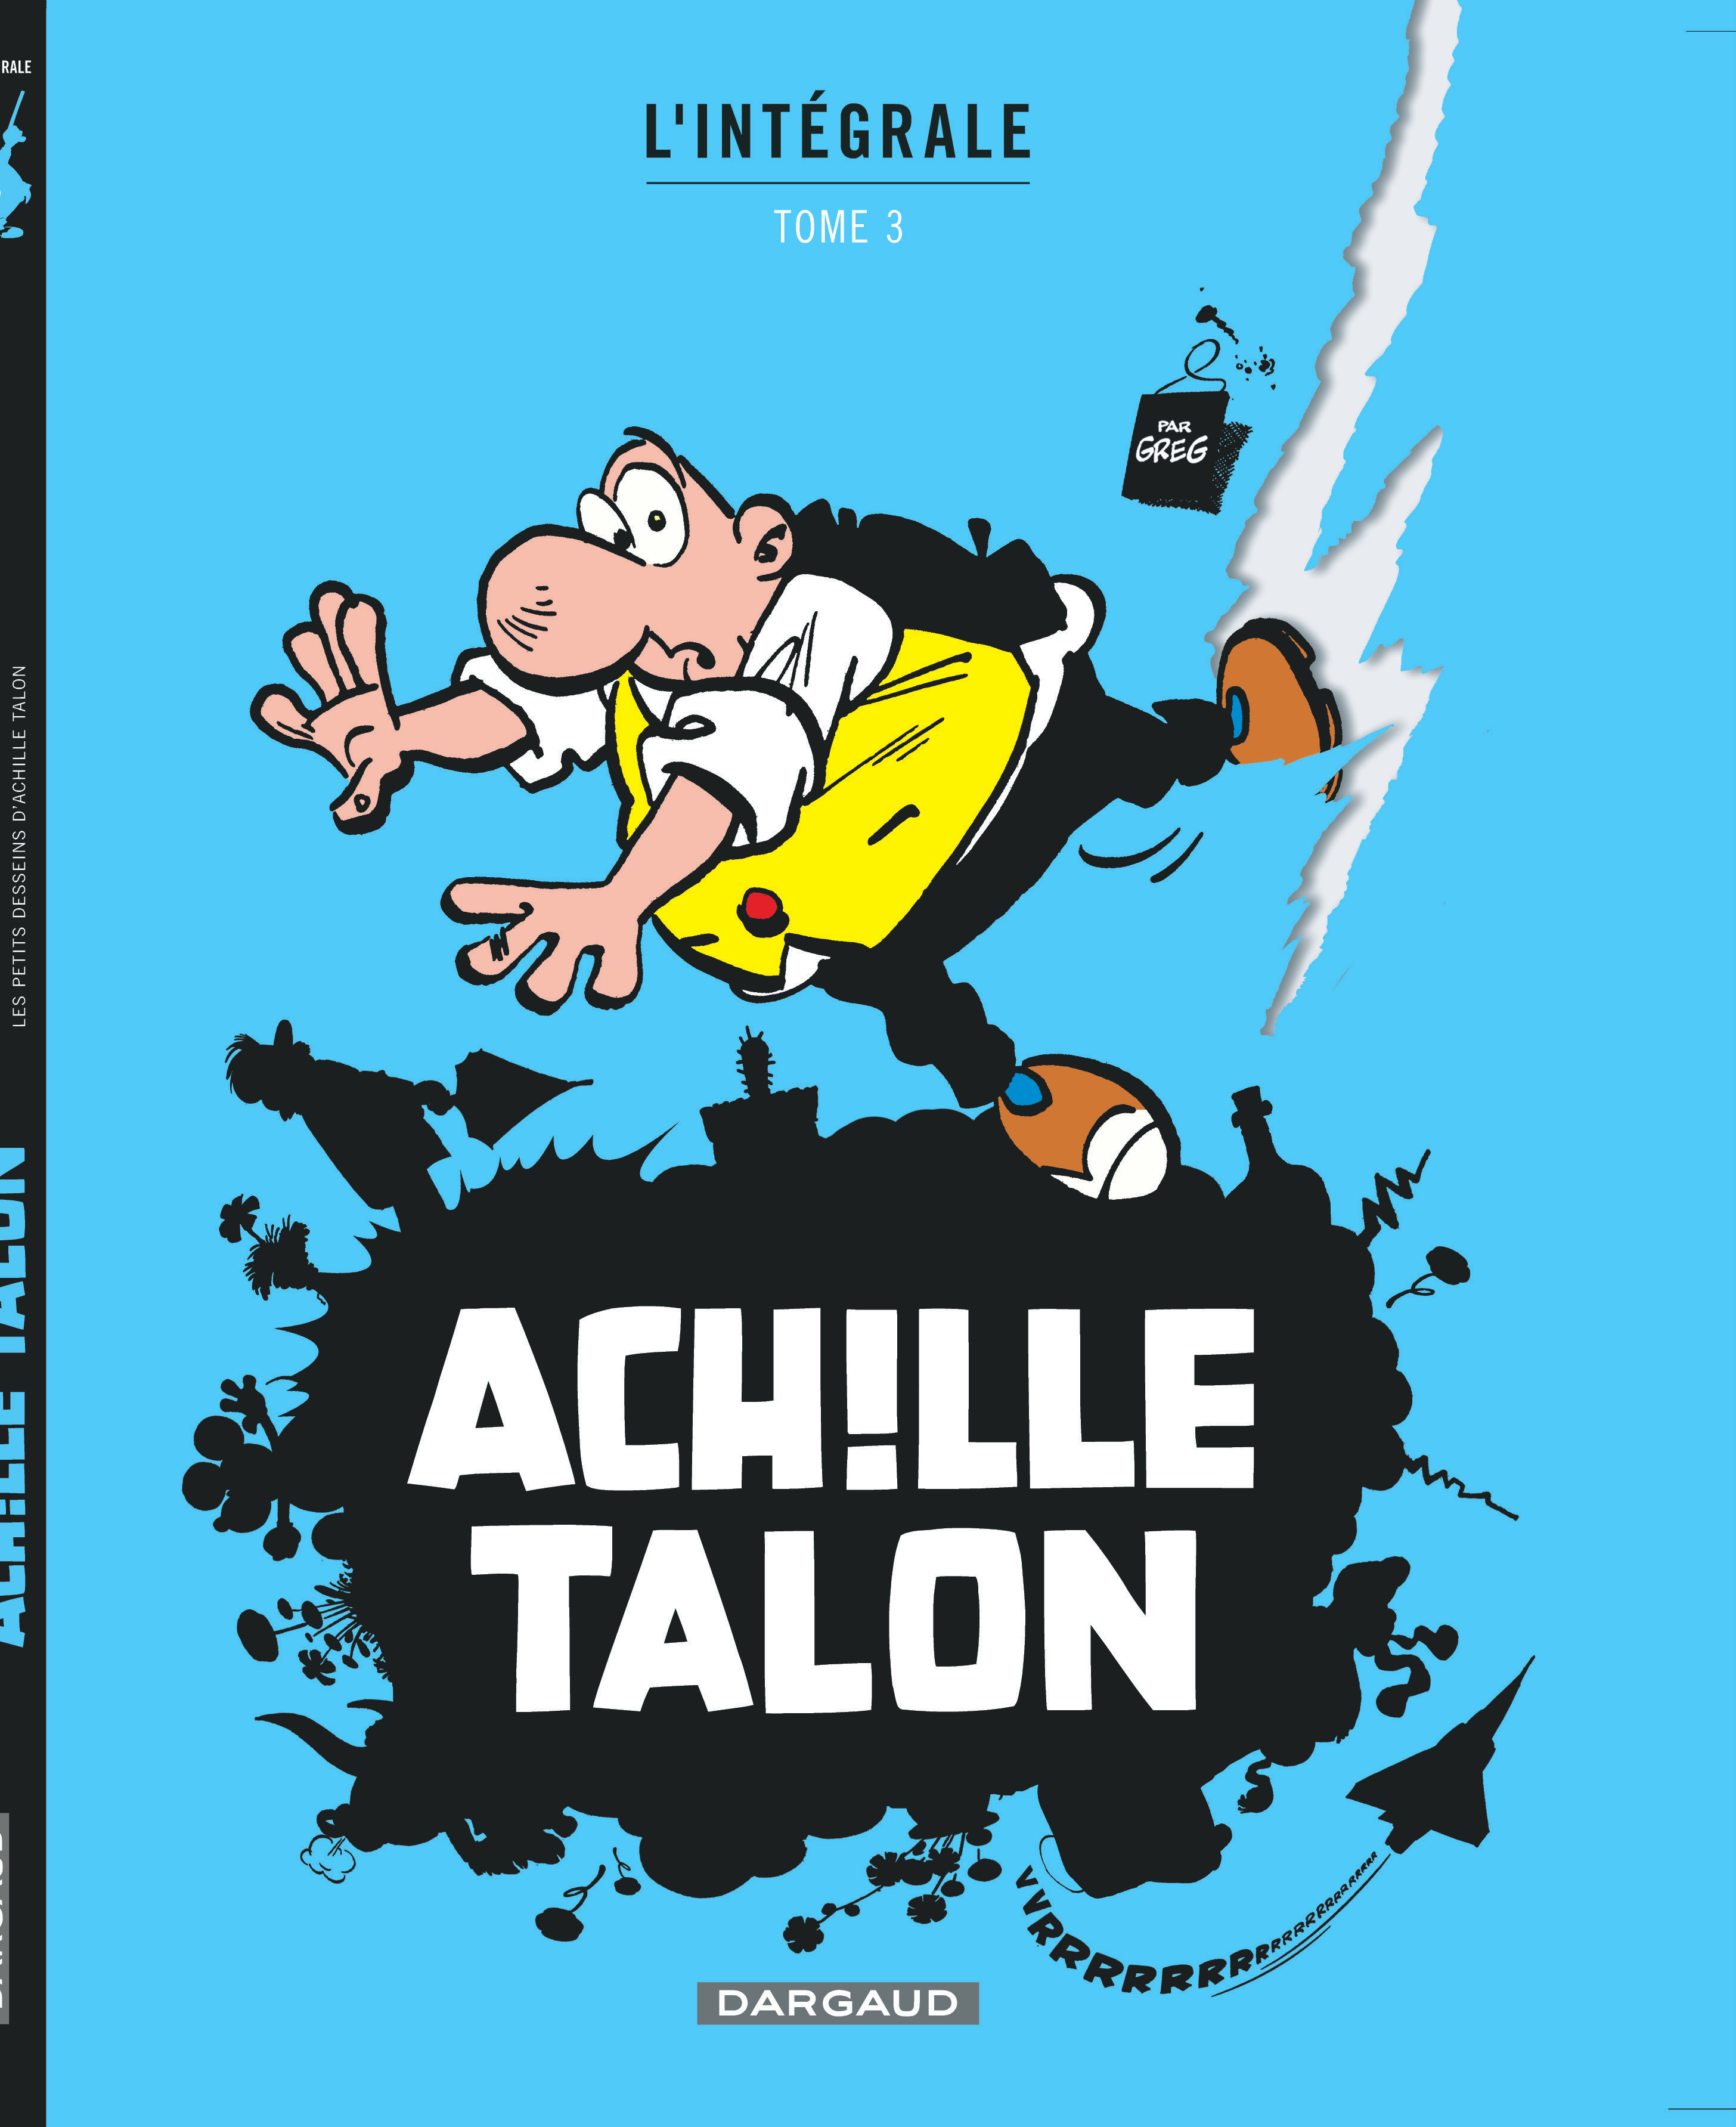 Achille Talon - Intégrales – Tome 3 – Mon Oeuvre à moi - tome 3 - couv